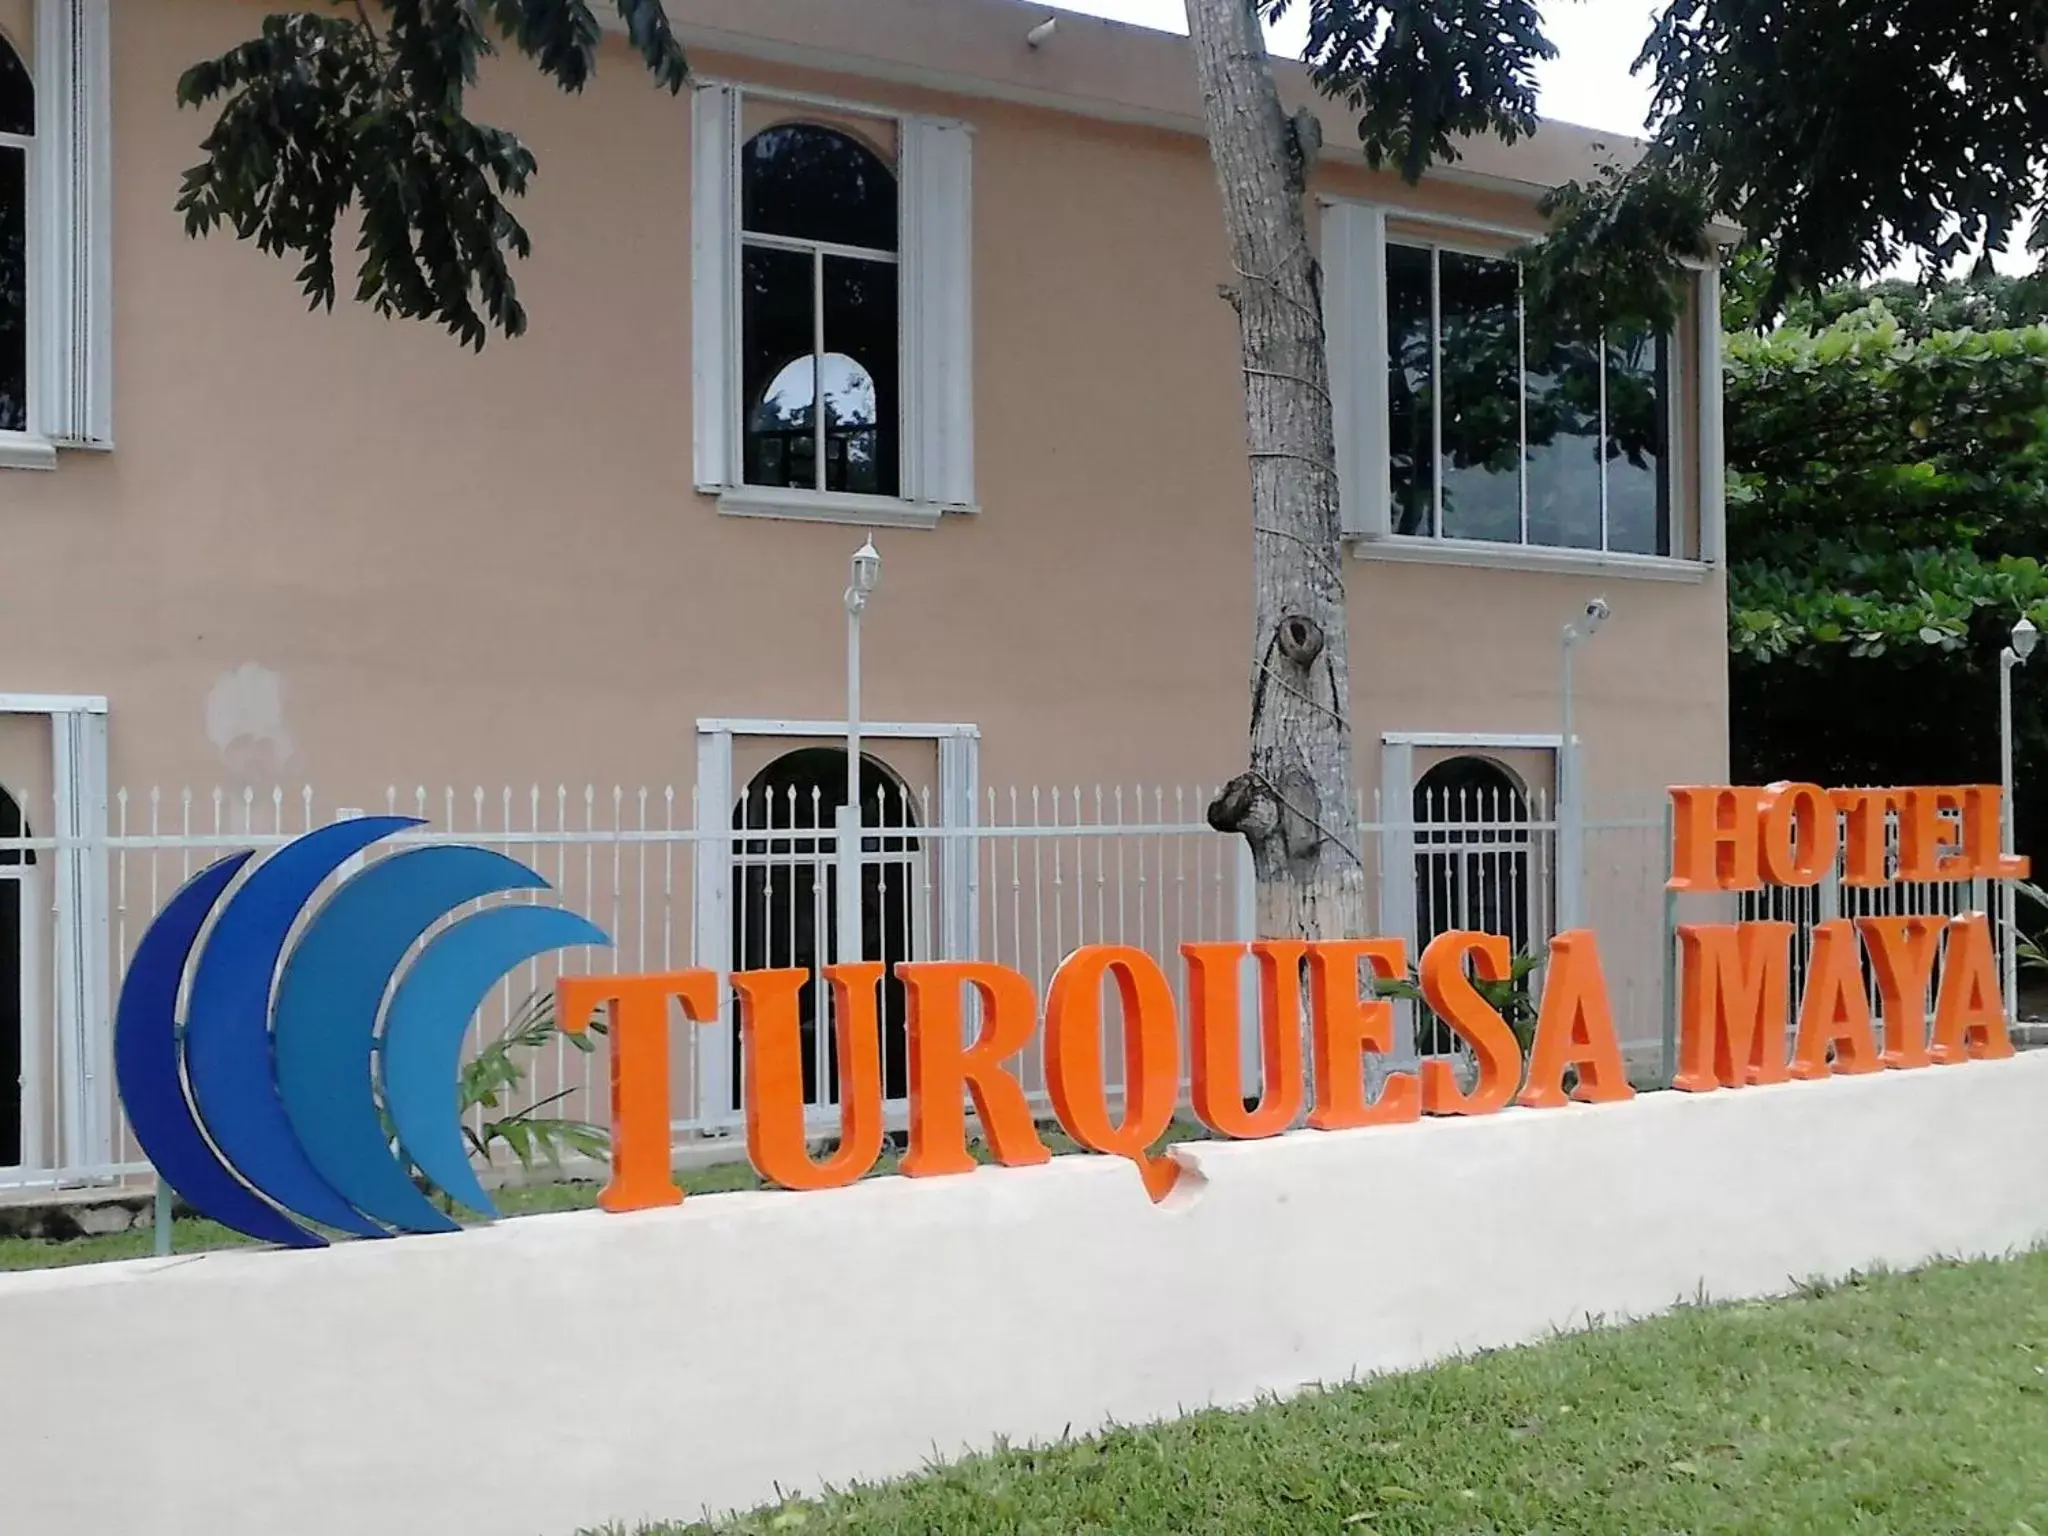 Off site, Property Building in Hotel Turquesa Maya